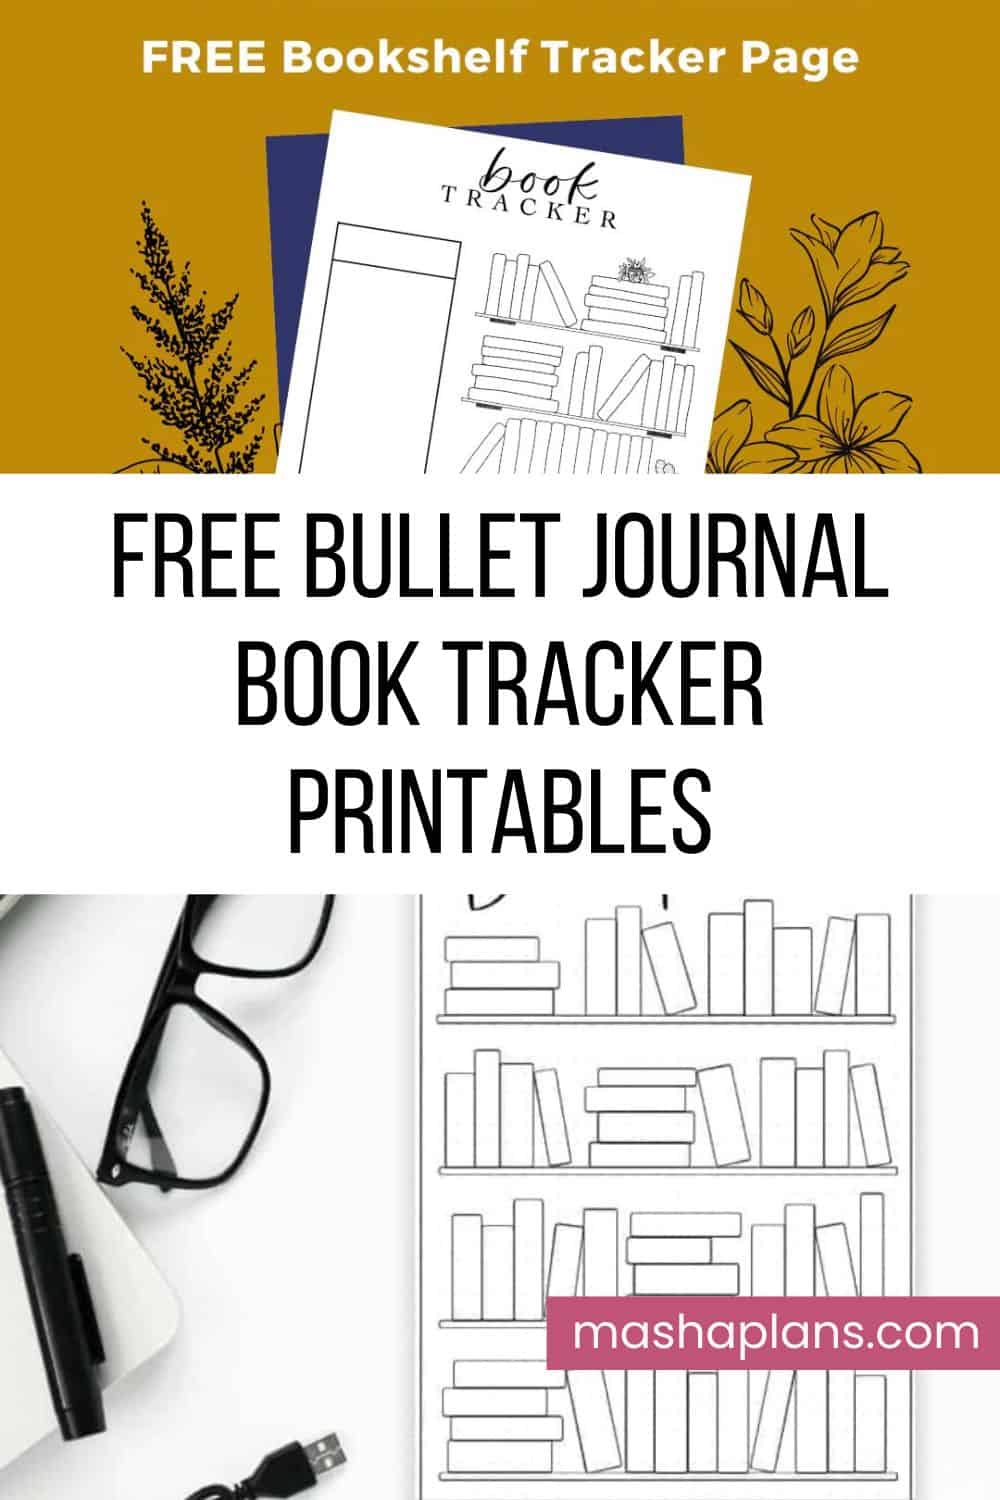 11 Free Bullet Journal Book Tracker Printables